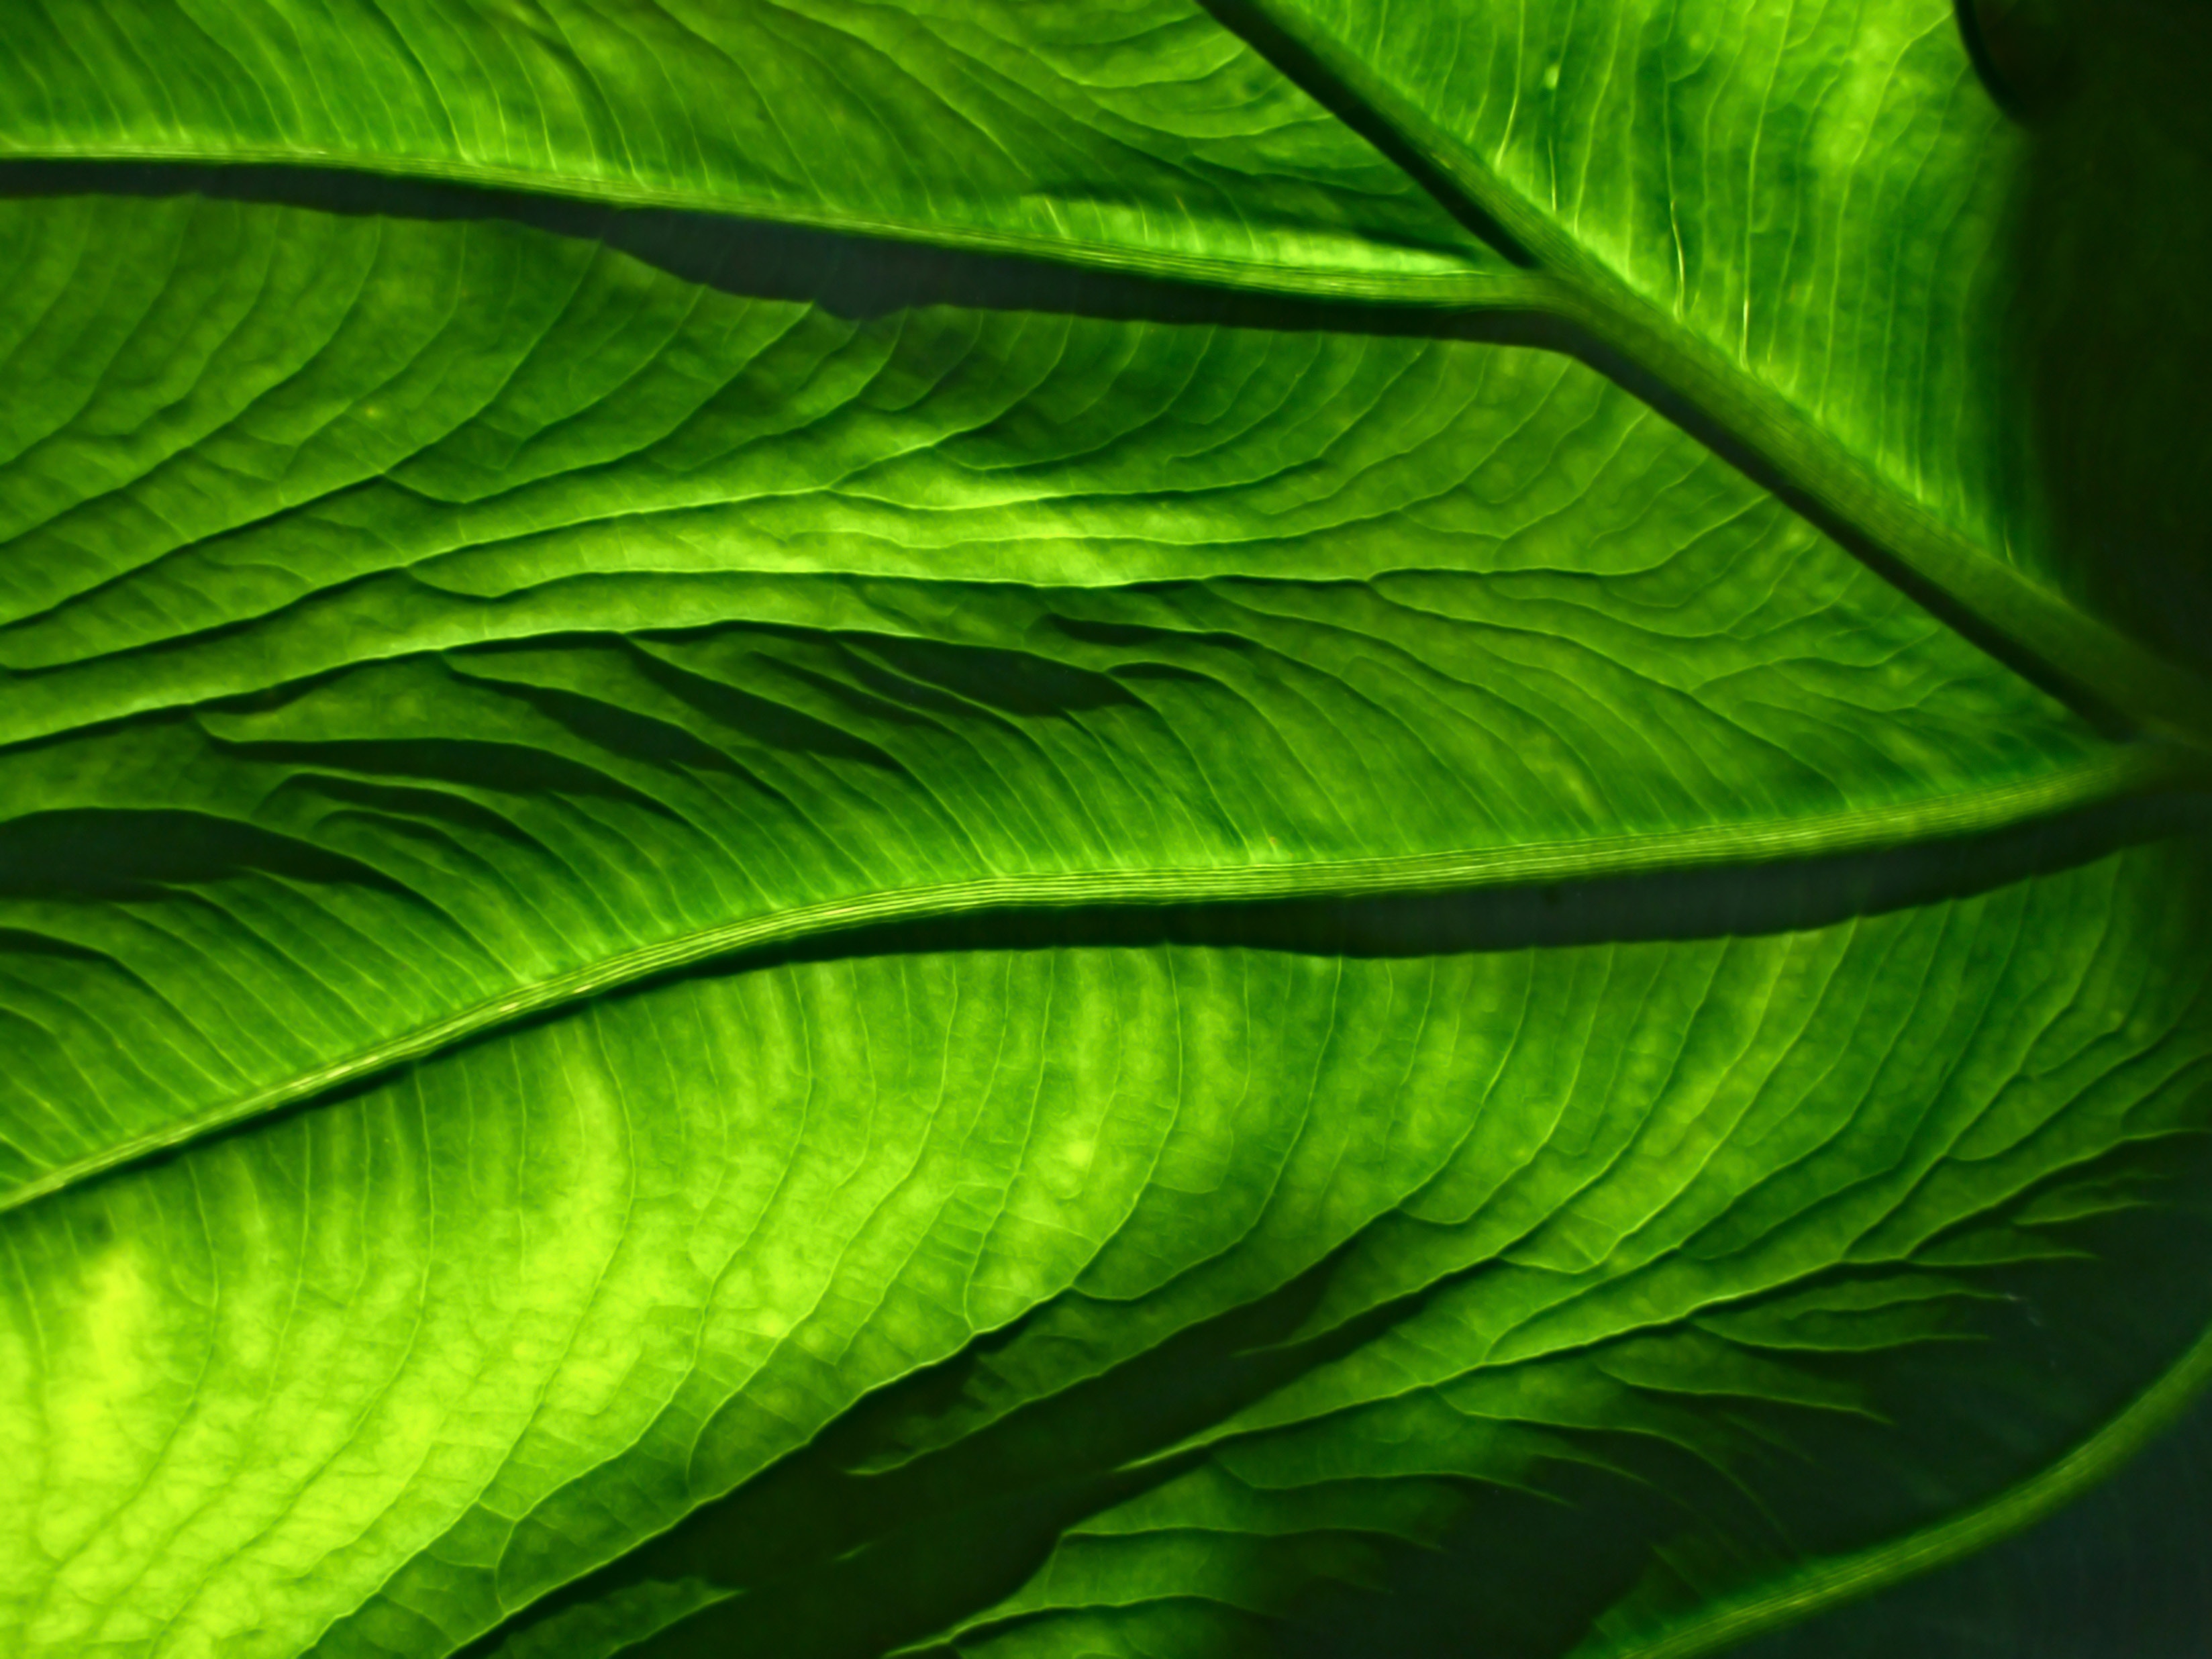 Macro view of a leaf.